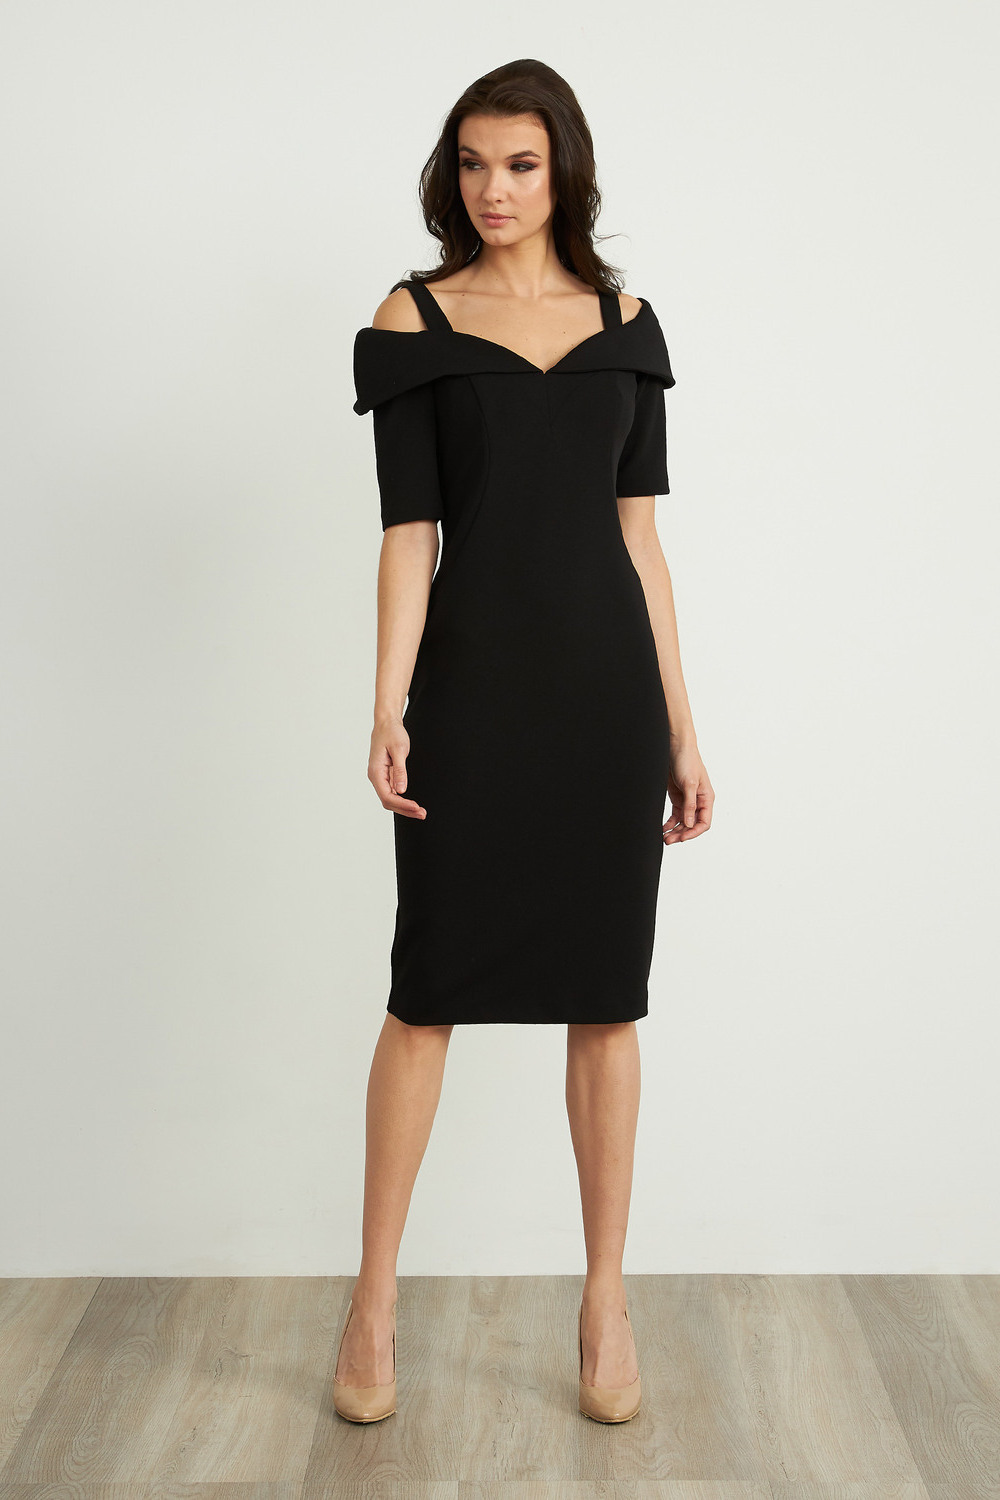 Joseph Ribkoff Bardot Dress Style 203645. Black